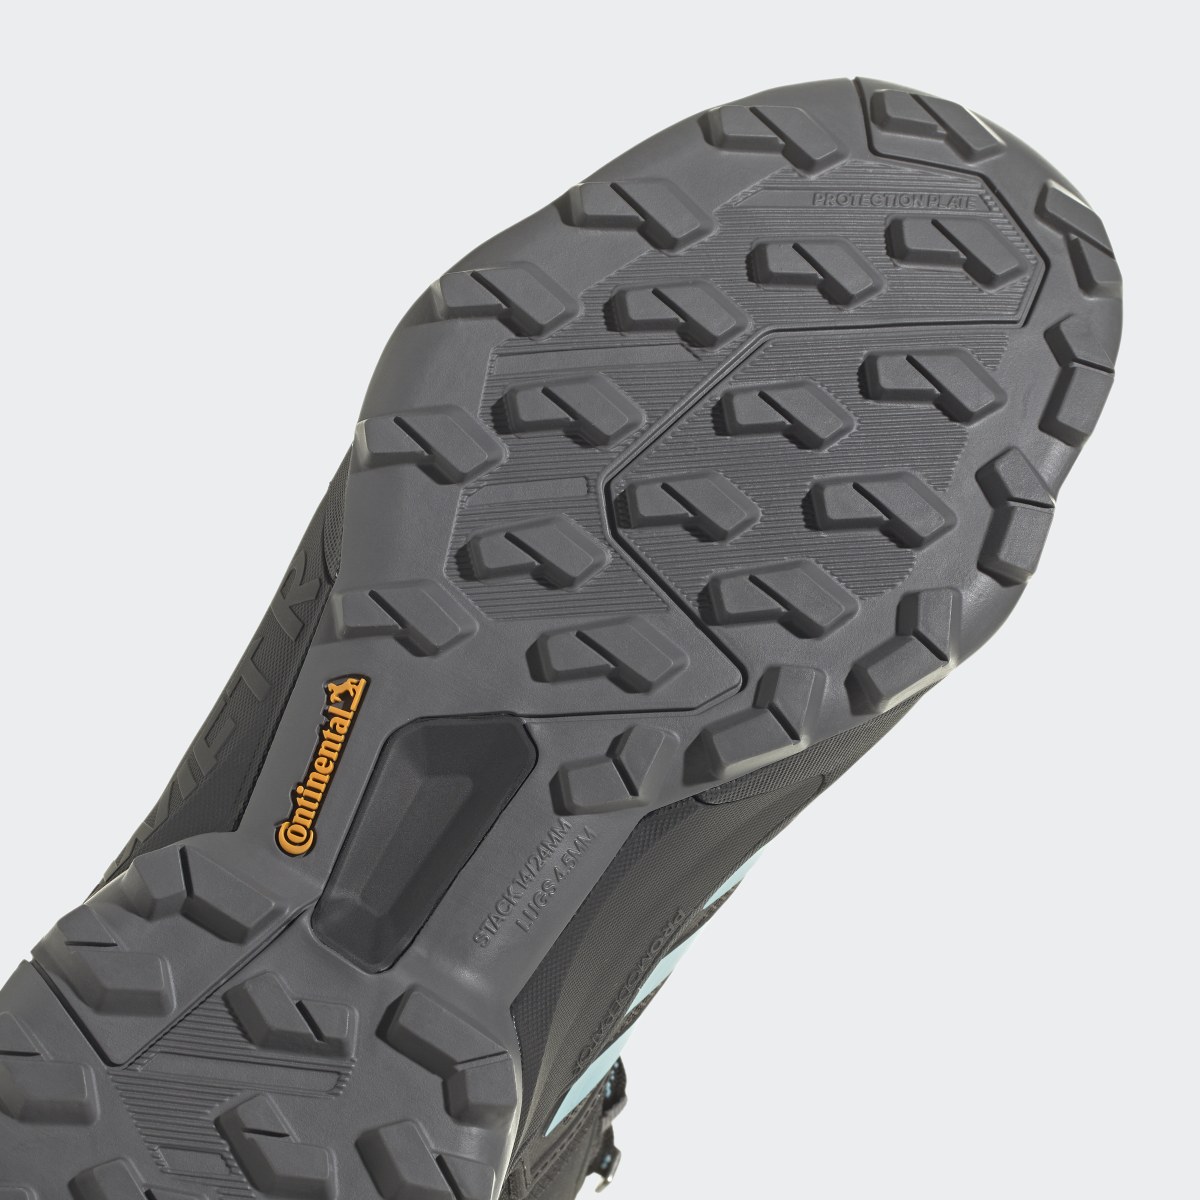 Adidas Sapatilhas de Caminhada Swift R3 Mid GORE-TEX TERREX. 9